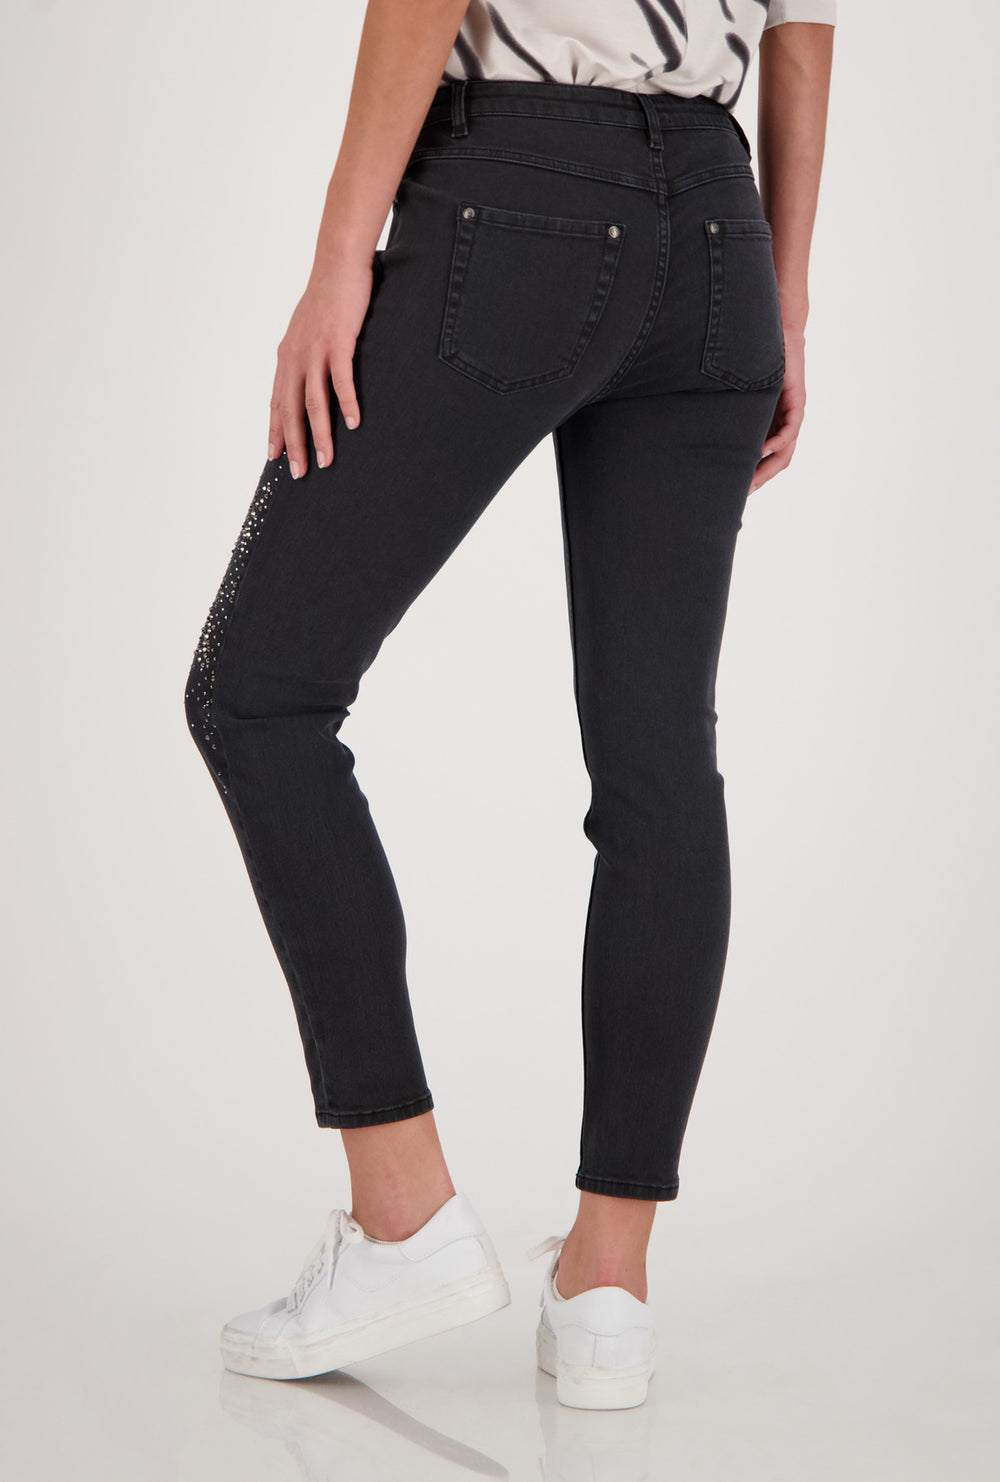 Monari 405892 Dark Grey Skinny Jeans with Rhinestones Back Model | Dotique